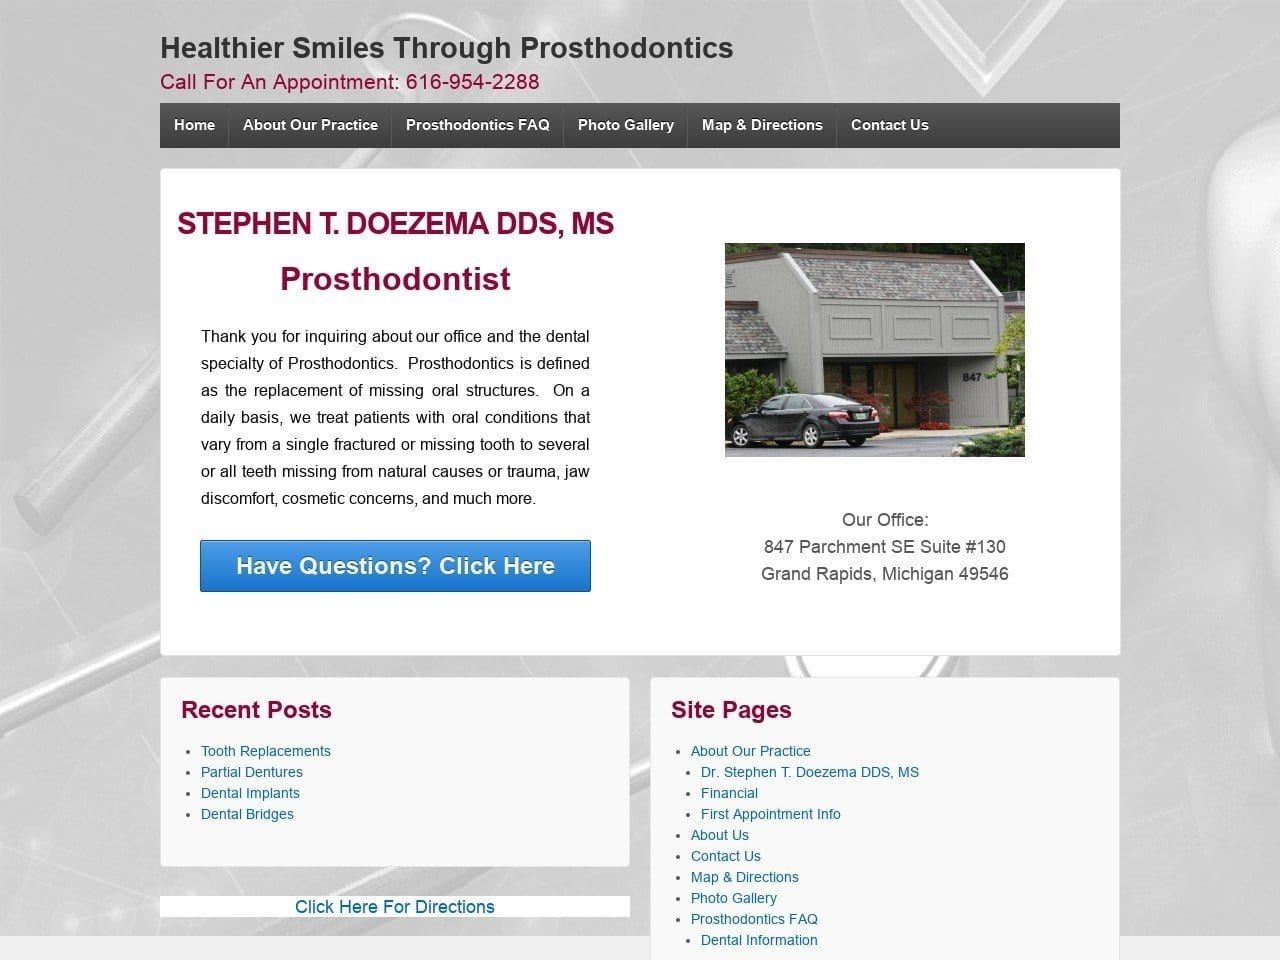 Doezema Prosthodontics Website Screenshot from doezemaprosthodontics.com